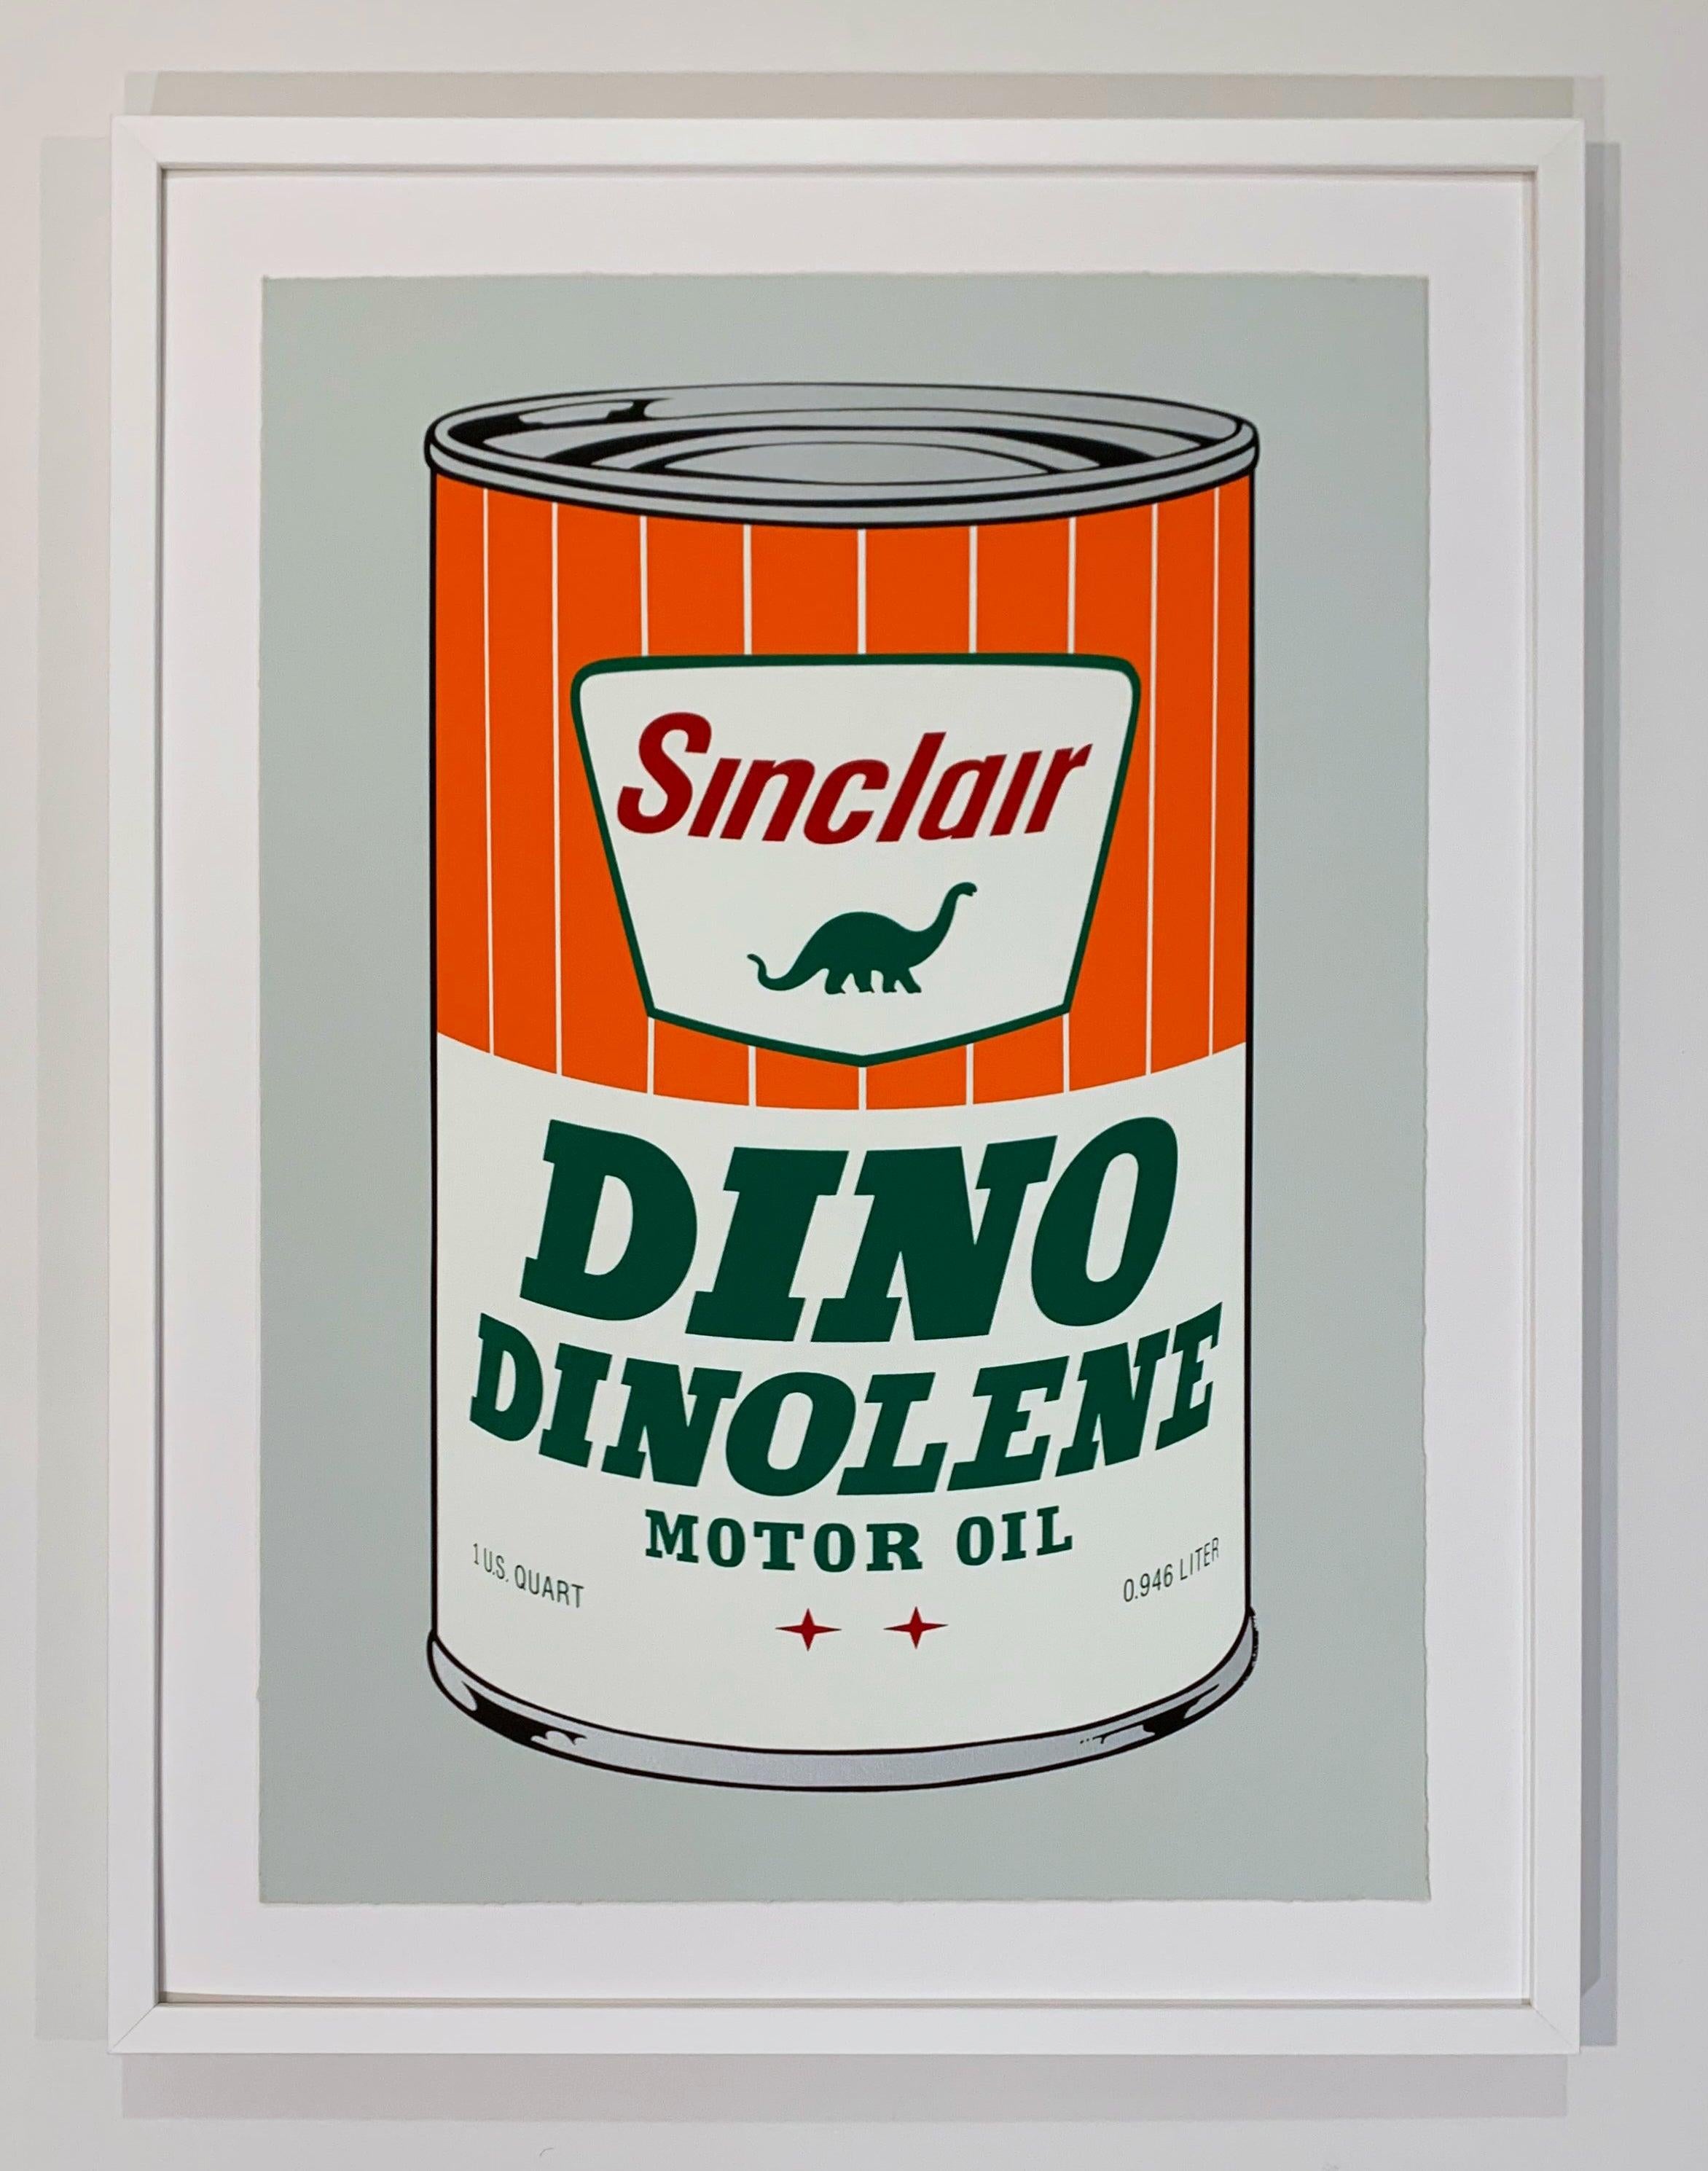 Masterpieces in Oils: Sinclair - Print by Heiner Meyer